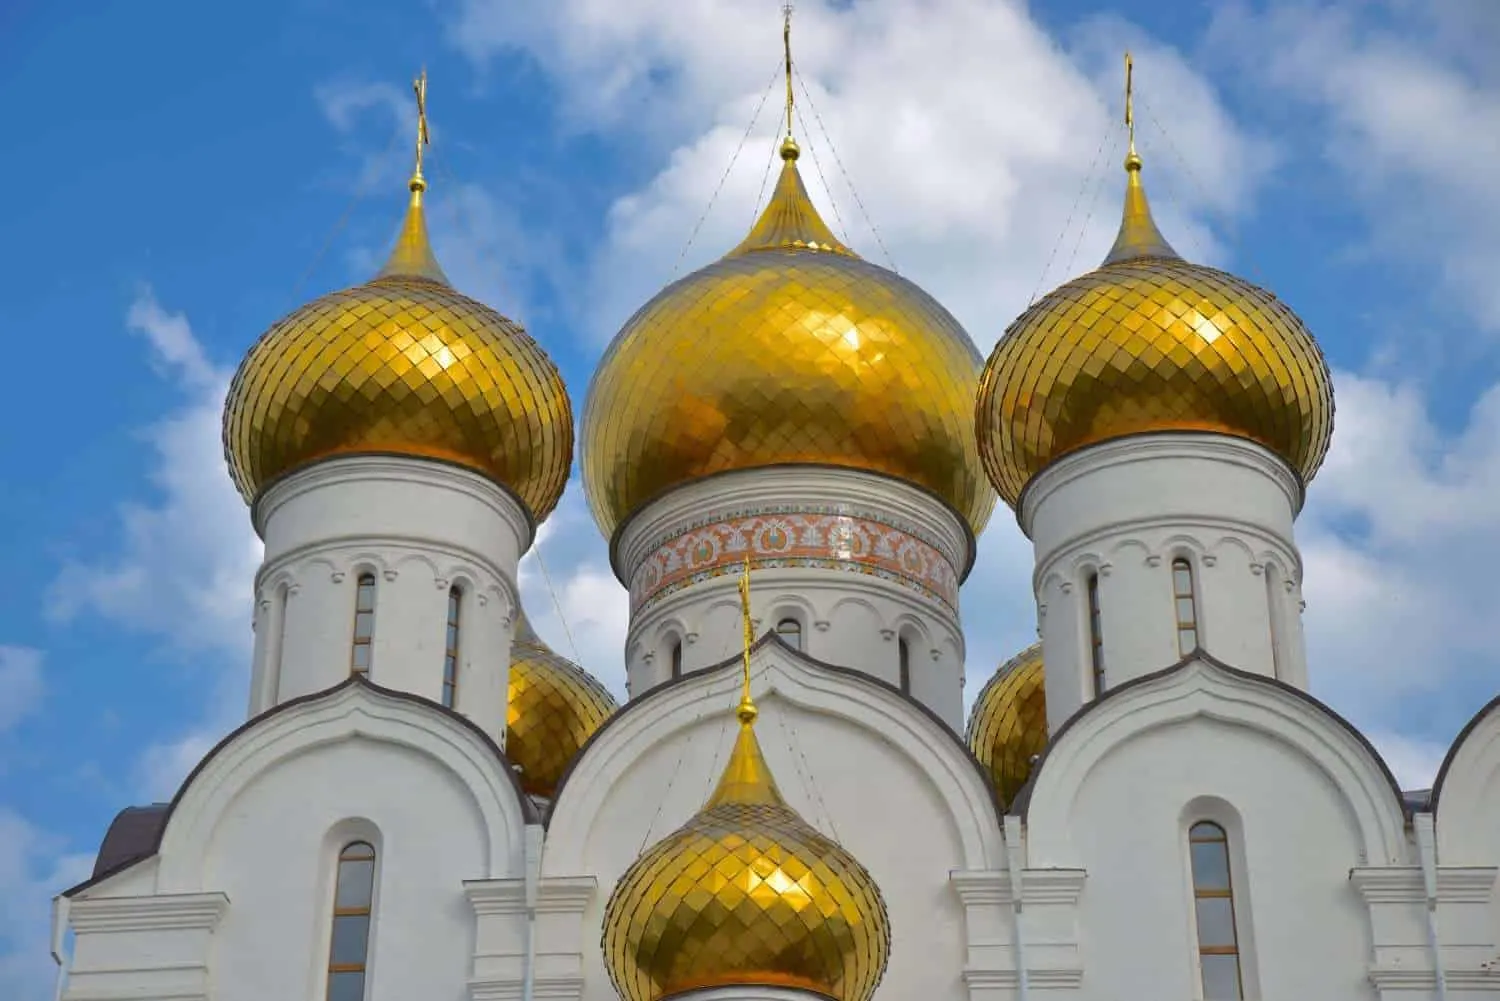 4 golden domes atop a church in Yaroslavl Russia